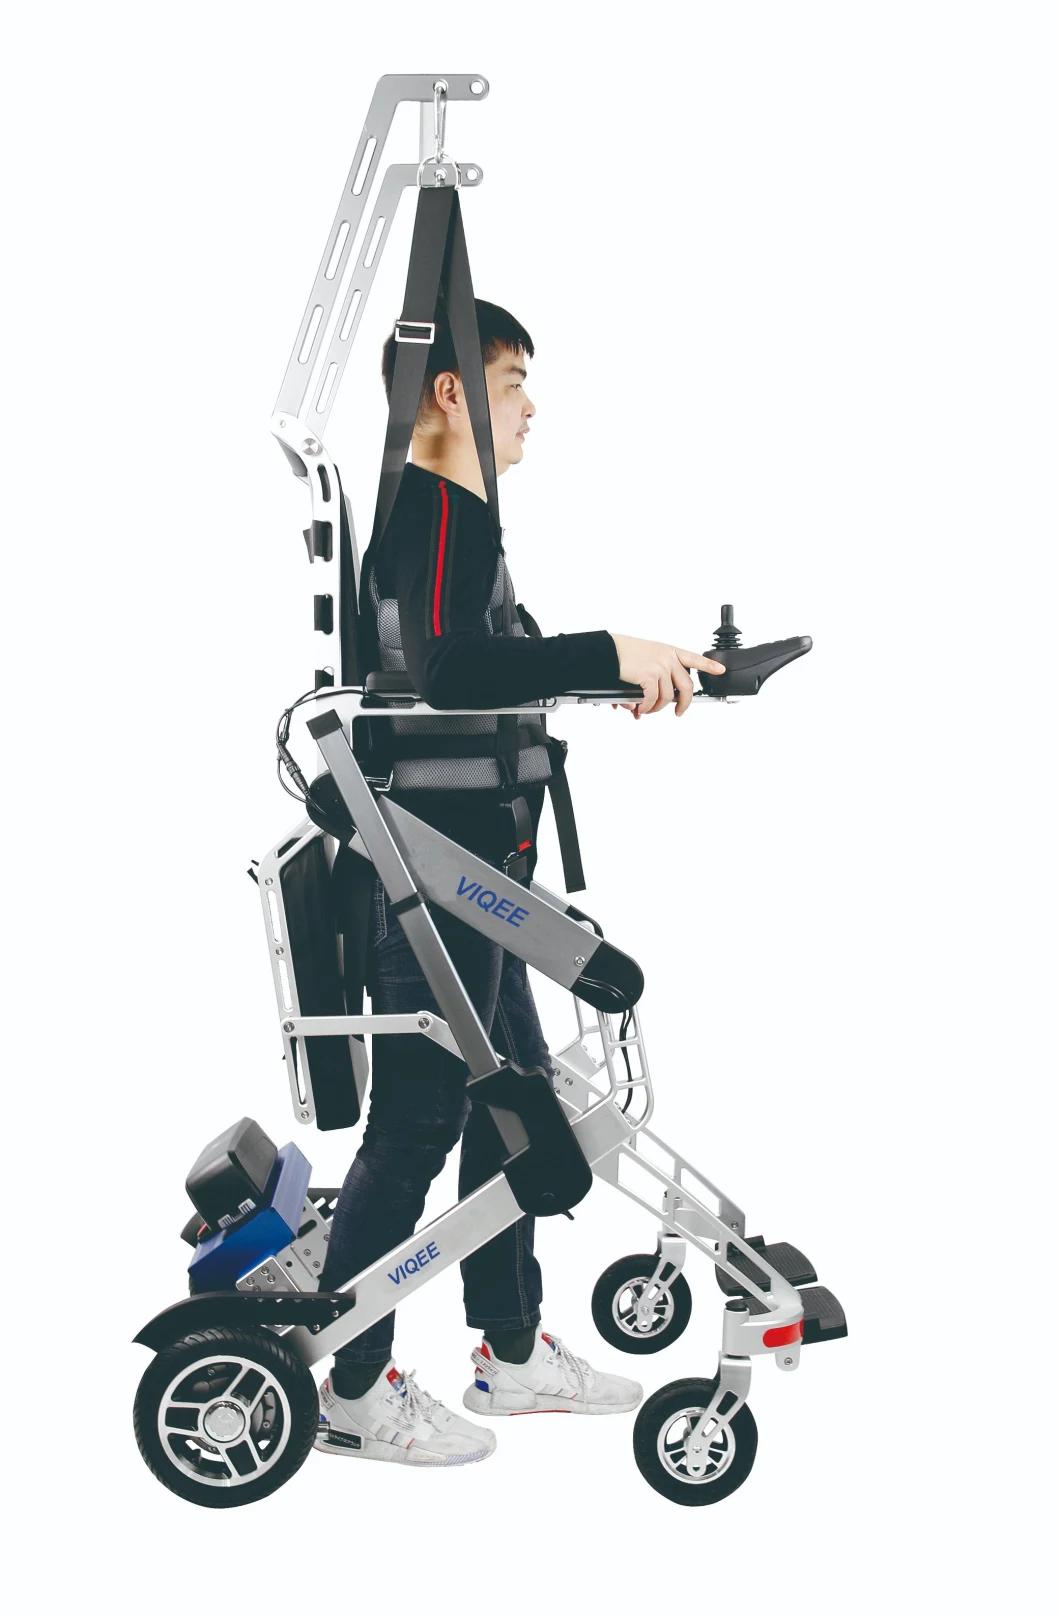 Intelligent Rehabilitation Wheelchair Robot Leg Training Instrument